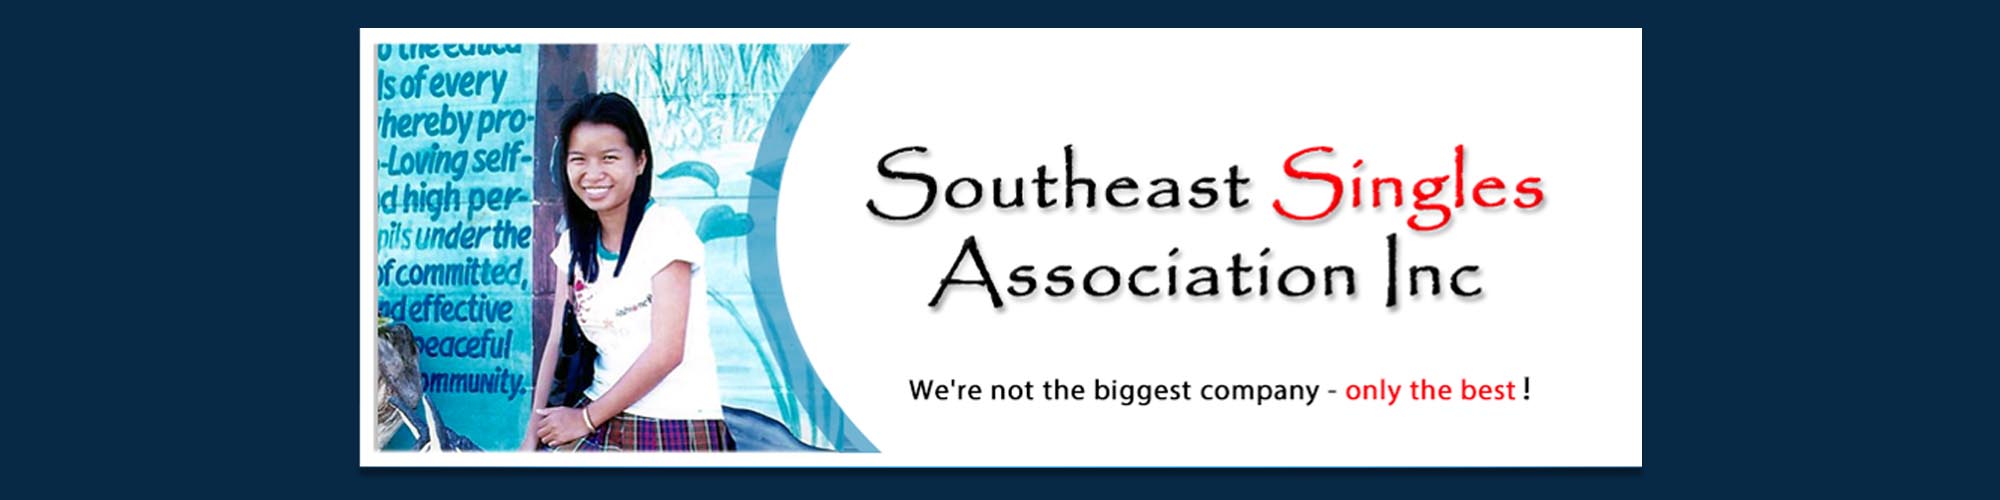 Southeast Singles Association Inc Banner